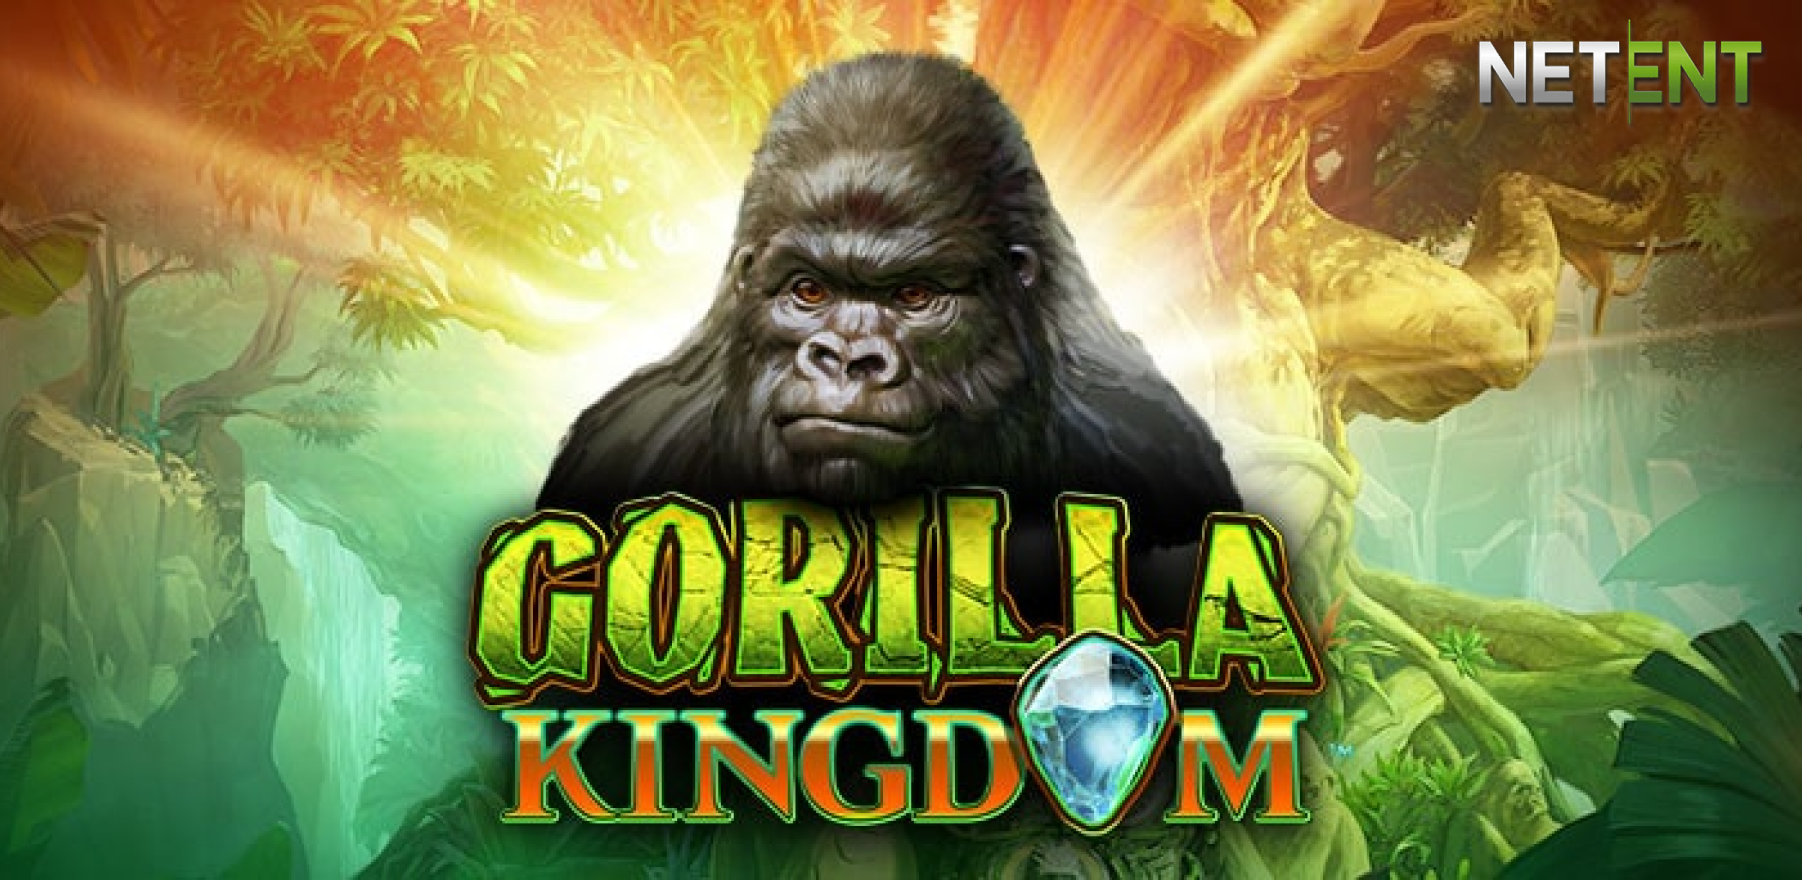 Gorilla Kingdom by NetEnt